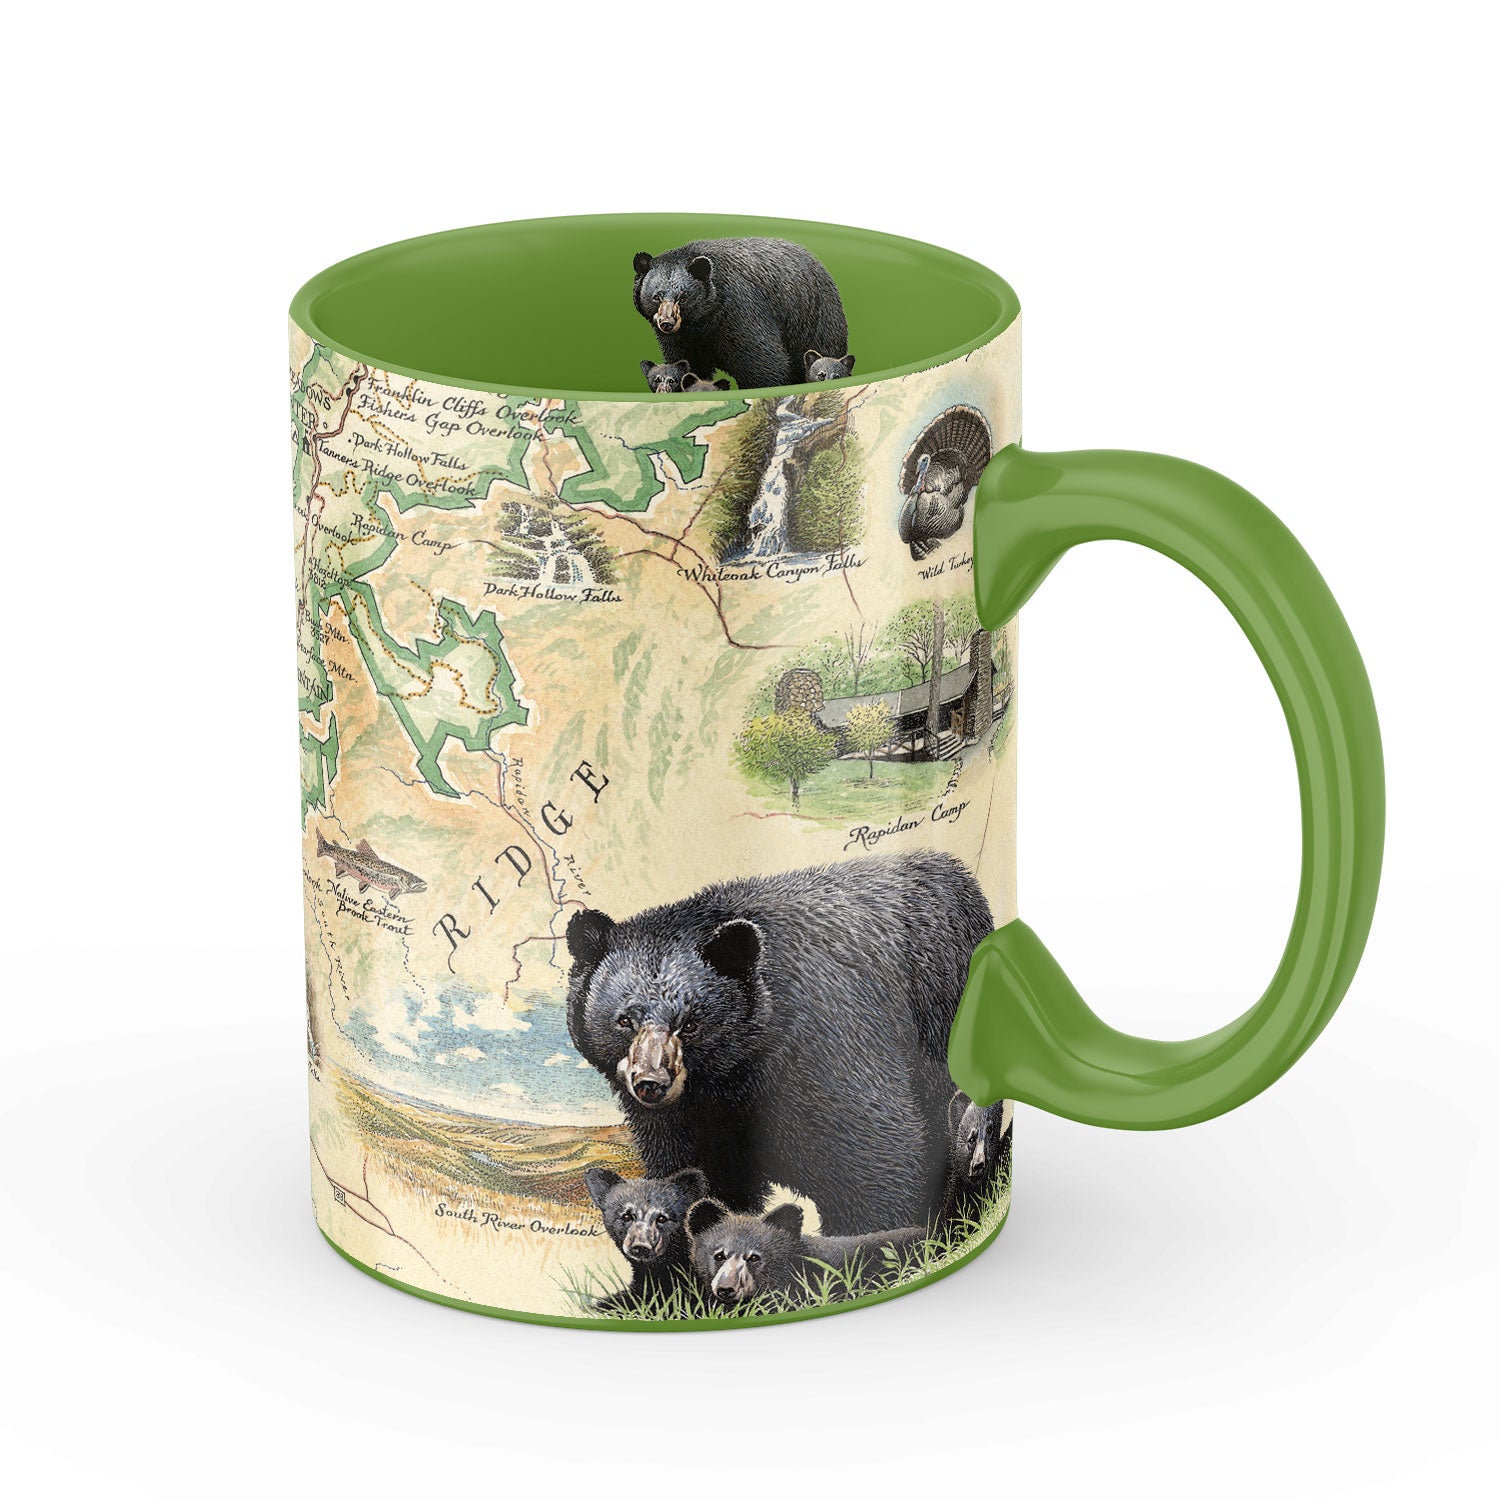 Green Shenandoah National Park Coffee Mug: Blue Ridge Mountains, black bears and cubs, wild turkey, waterfalls, and more! 16 oz.